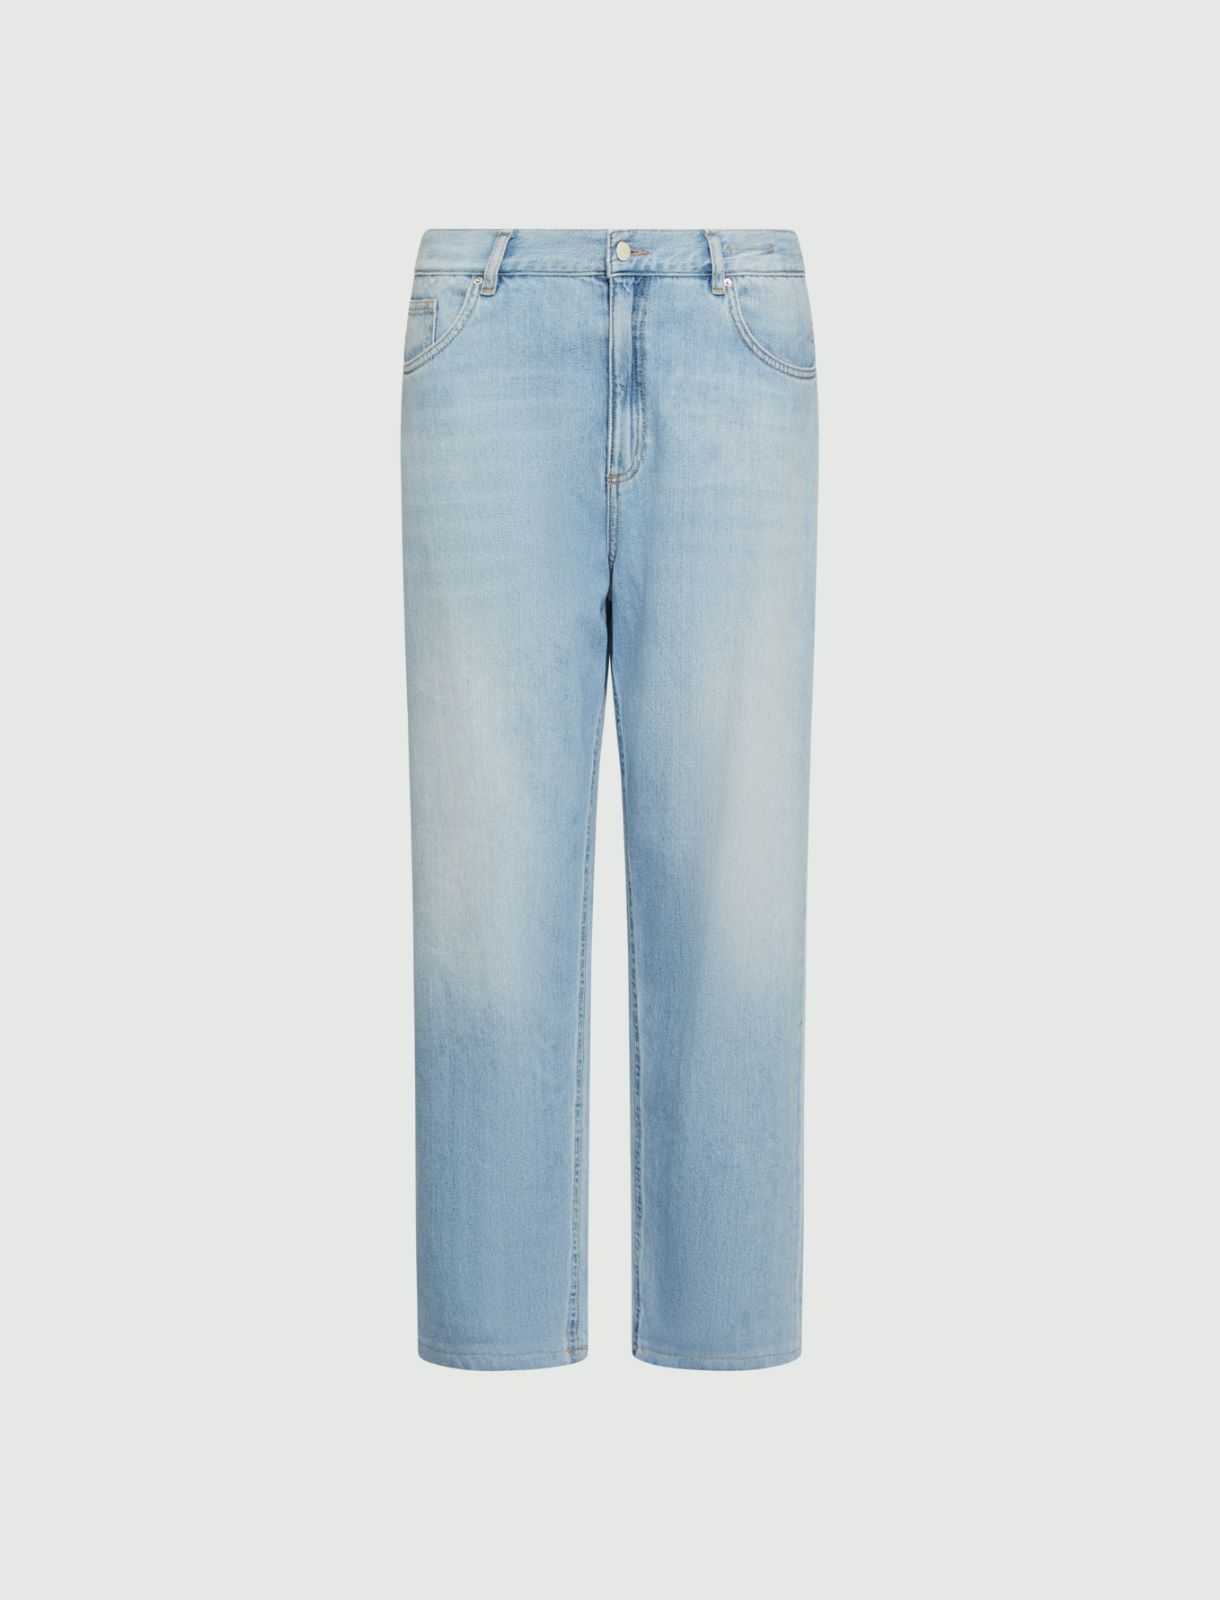 Tomboy jeans - Blue jeans - Marina Rinaldi - 6